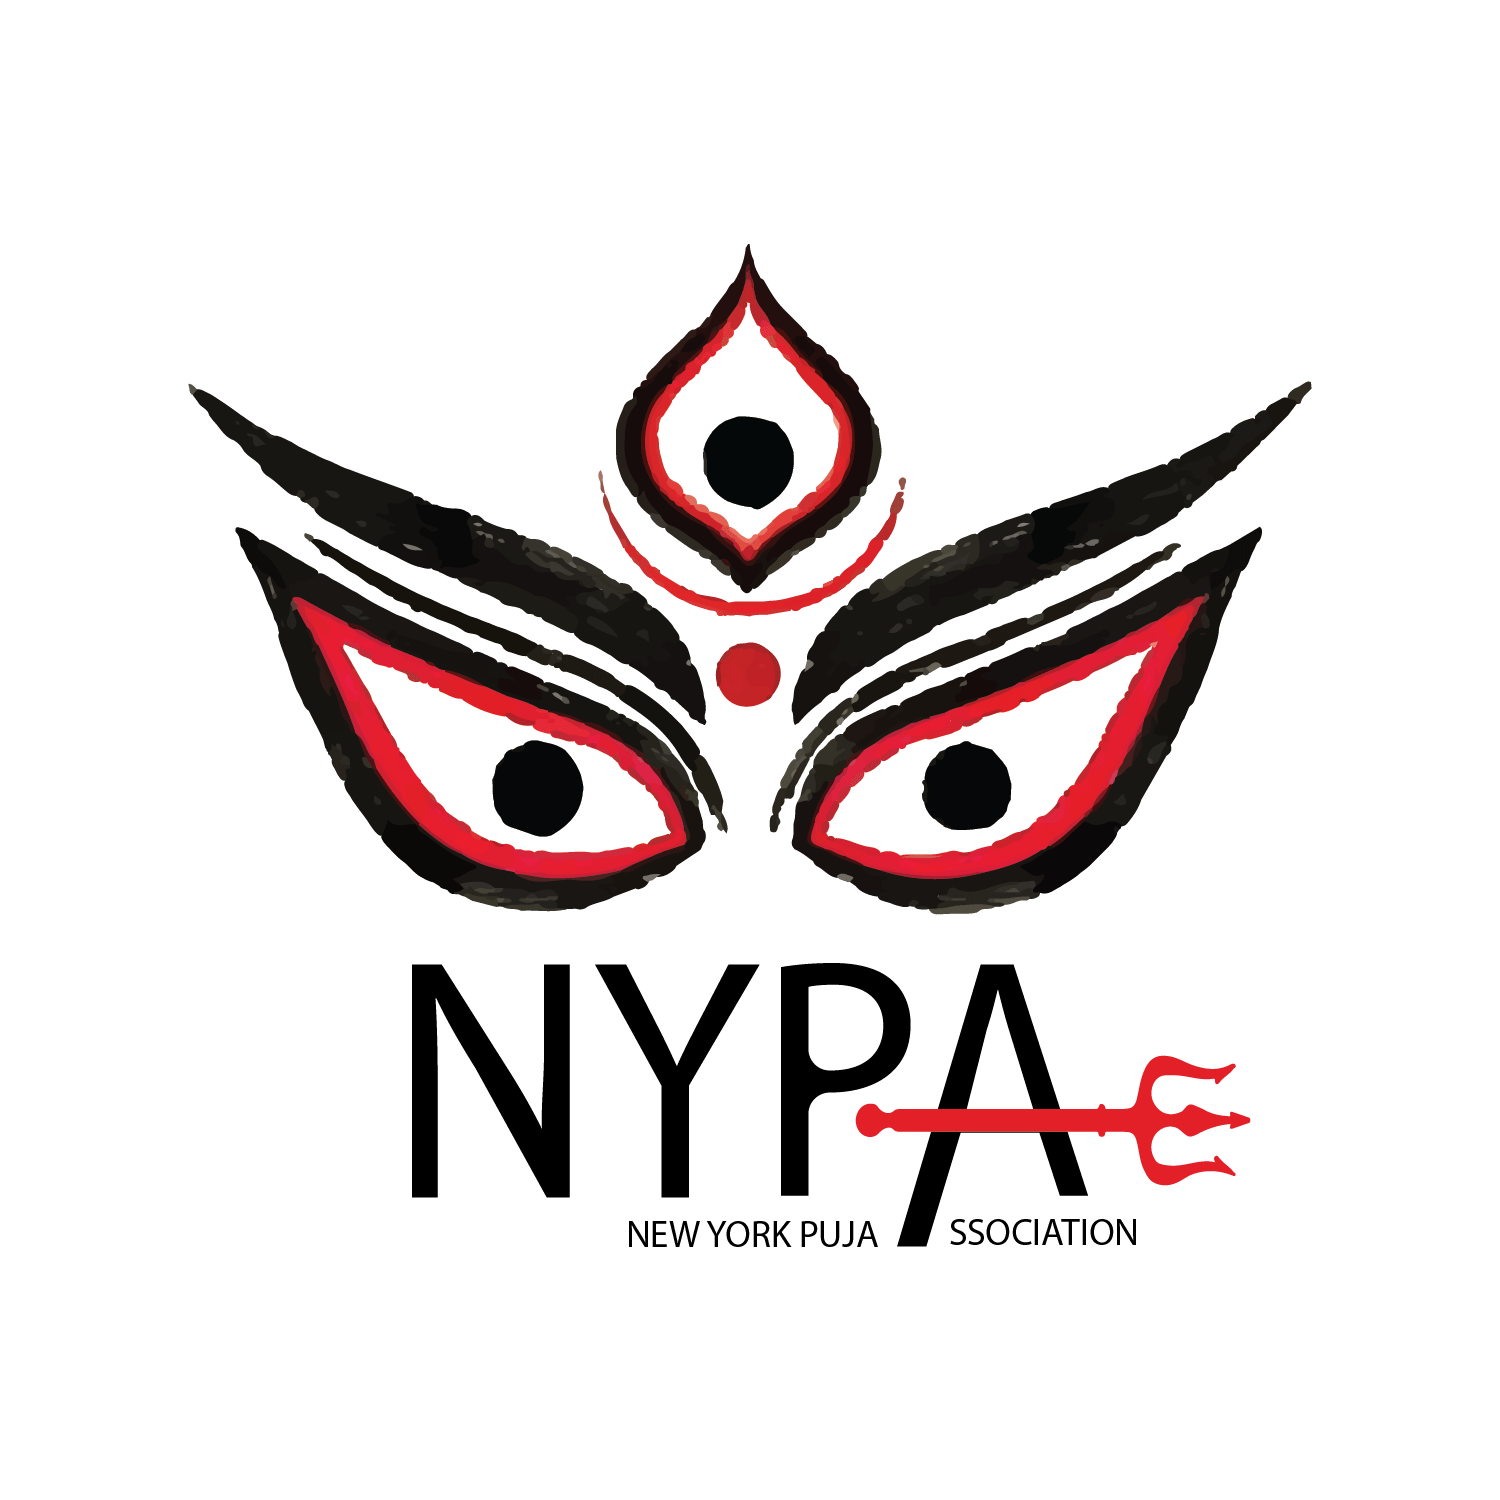 New York Puja Association